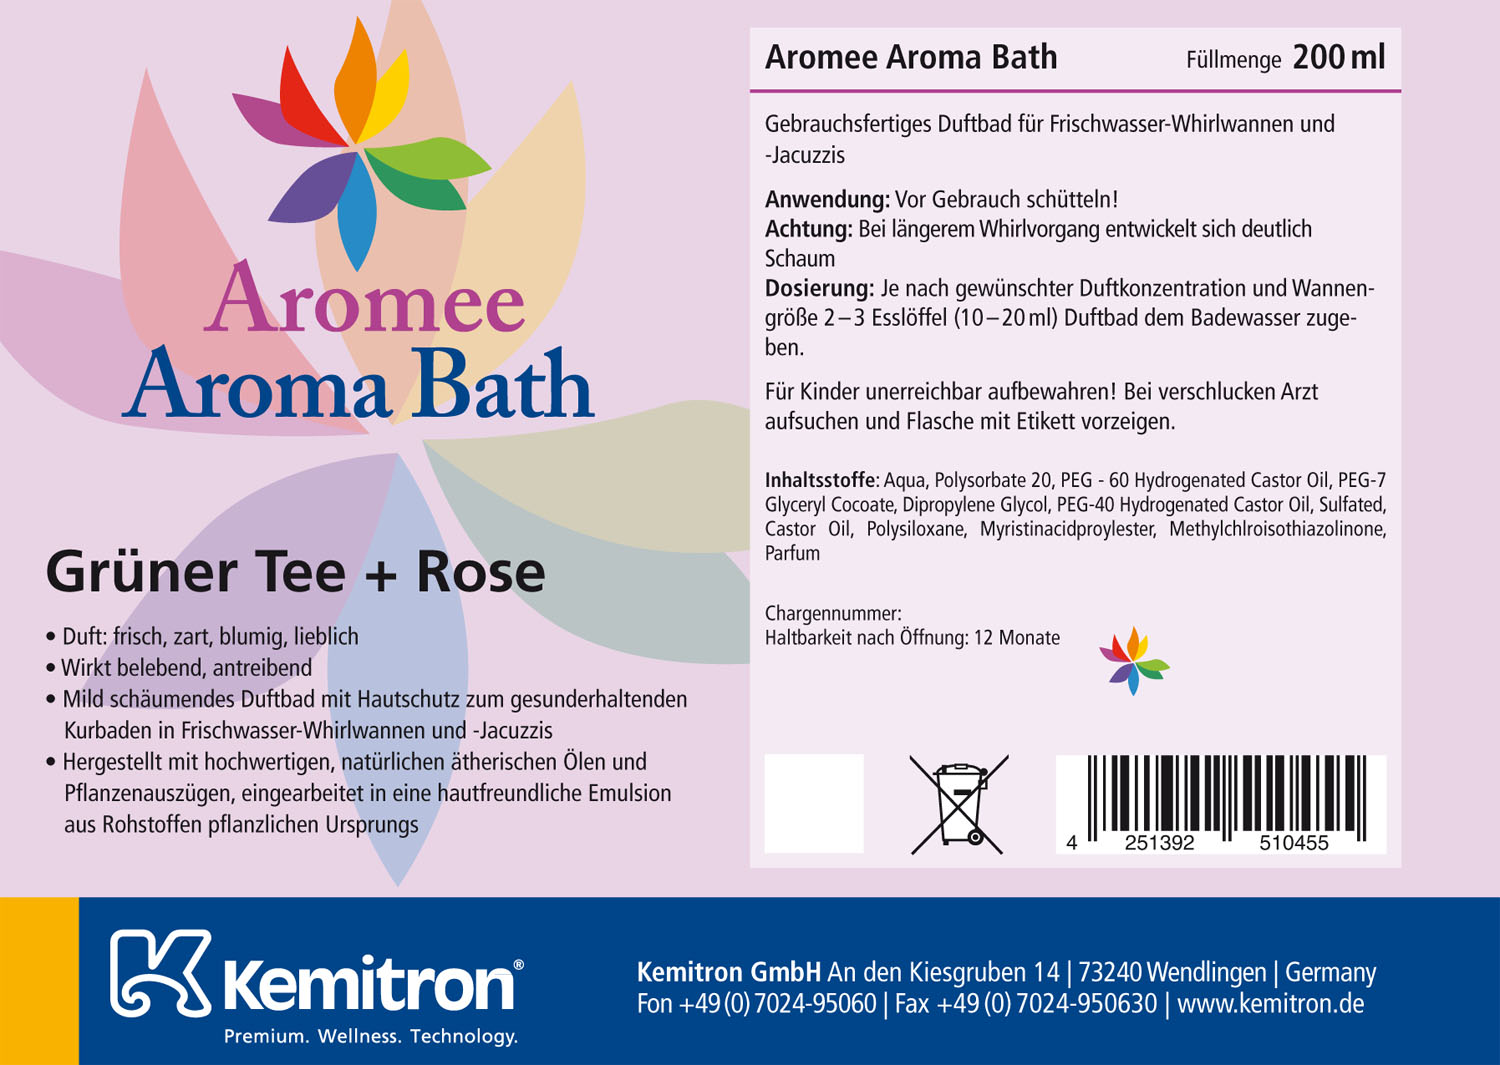 Aromee Aromabath "Grüner Tee + Rosen"